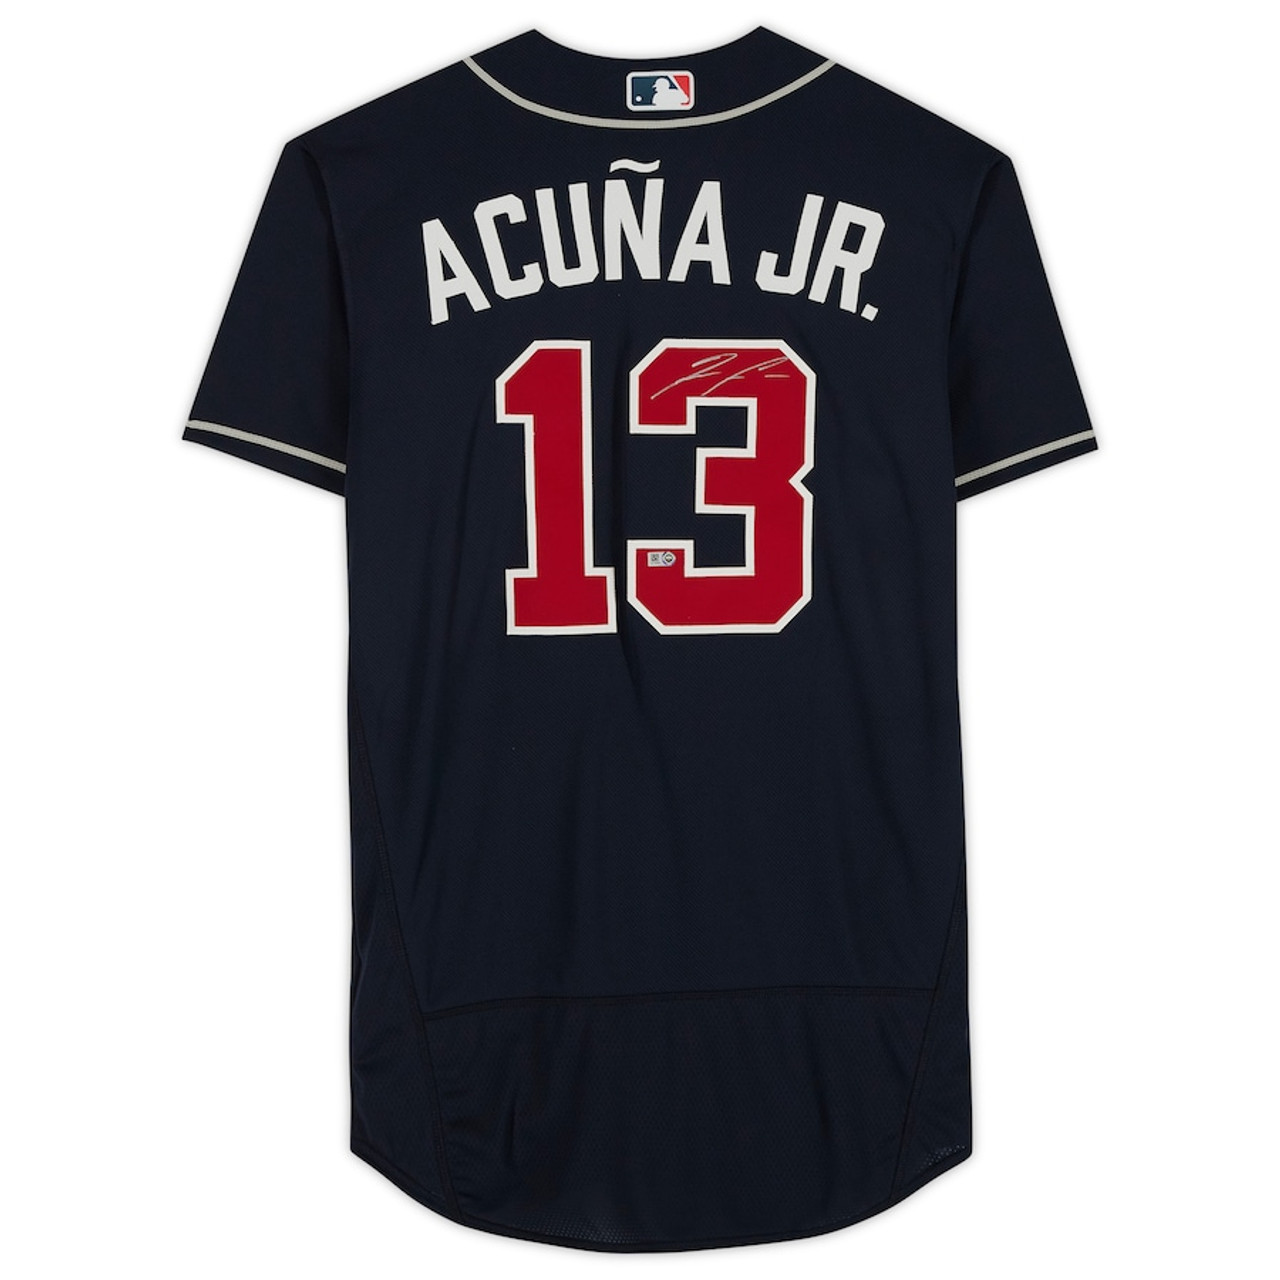 acuna jr throwback jersey